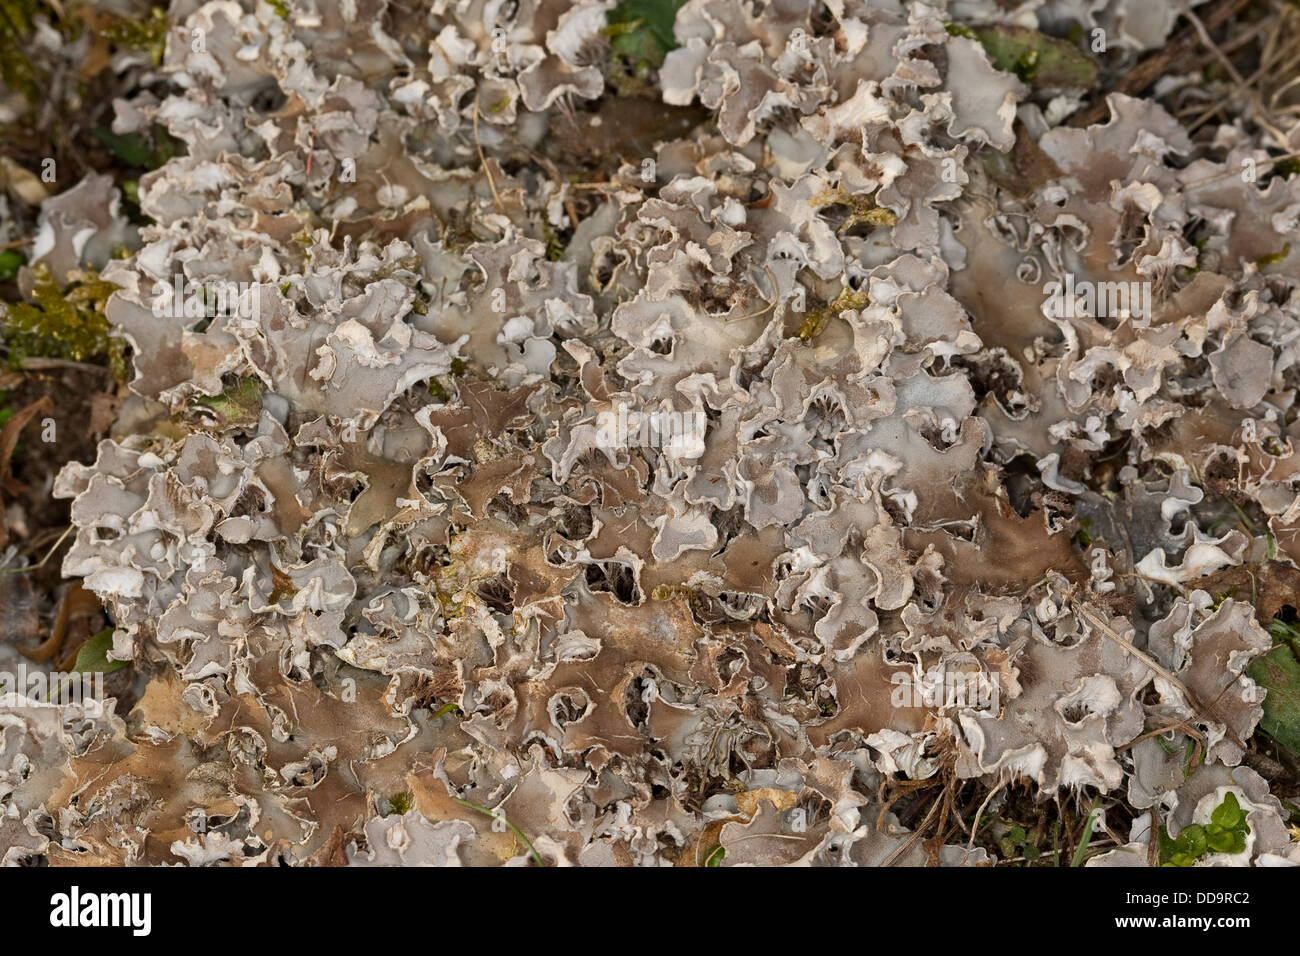 Field dog-lichen, Bereifte Schildflechte, Peltigera rufescens, Peltidea canina, Peltigera canina, Peltigera spuria, Blattflechte Stock Photo